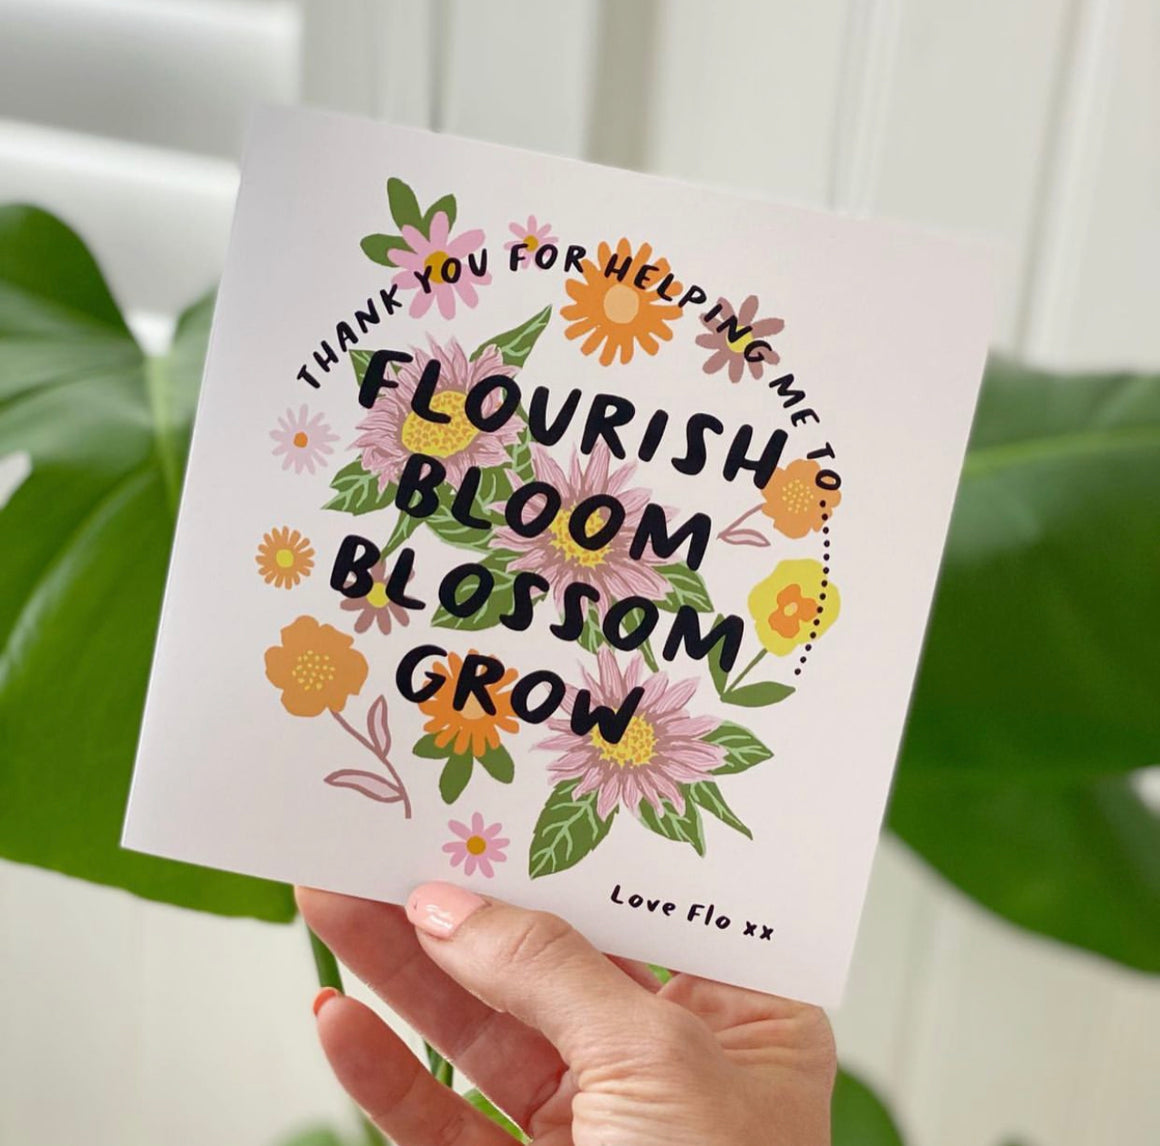 Thank you Teacher Card -Flourish, Bloom, Blossom Grow Design